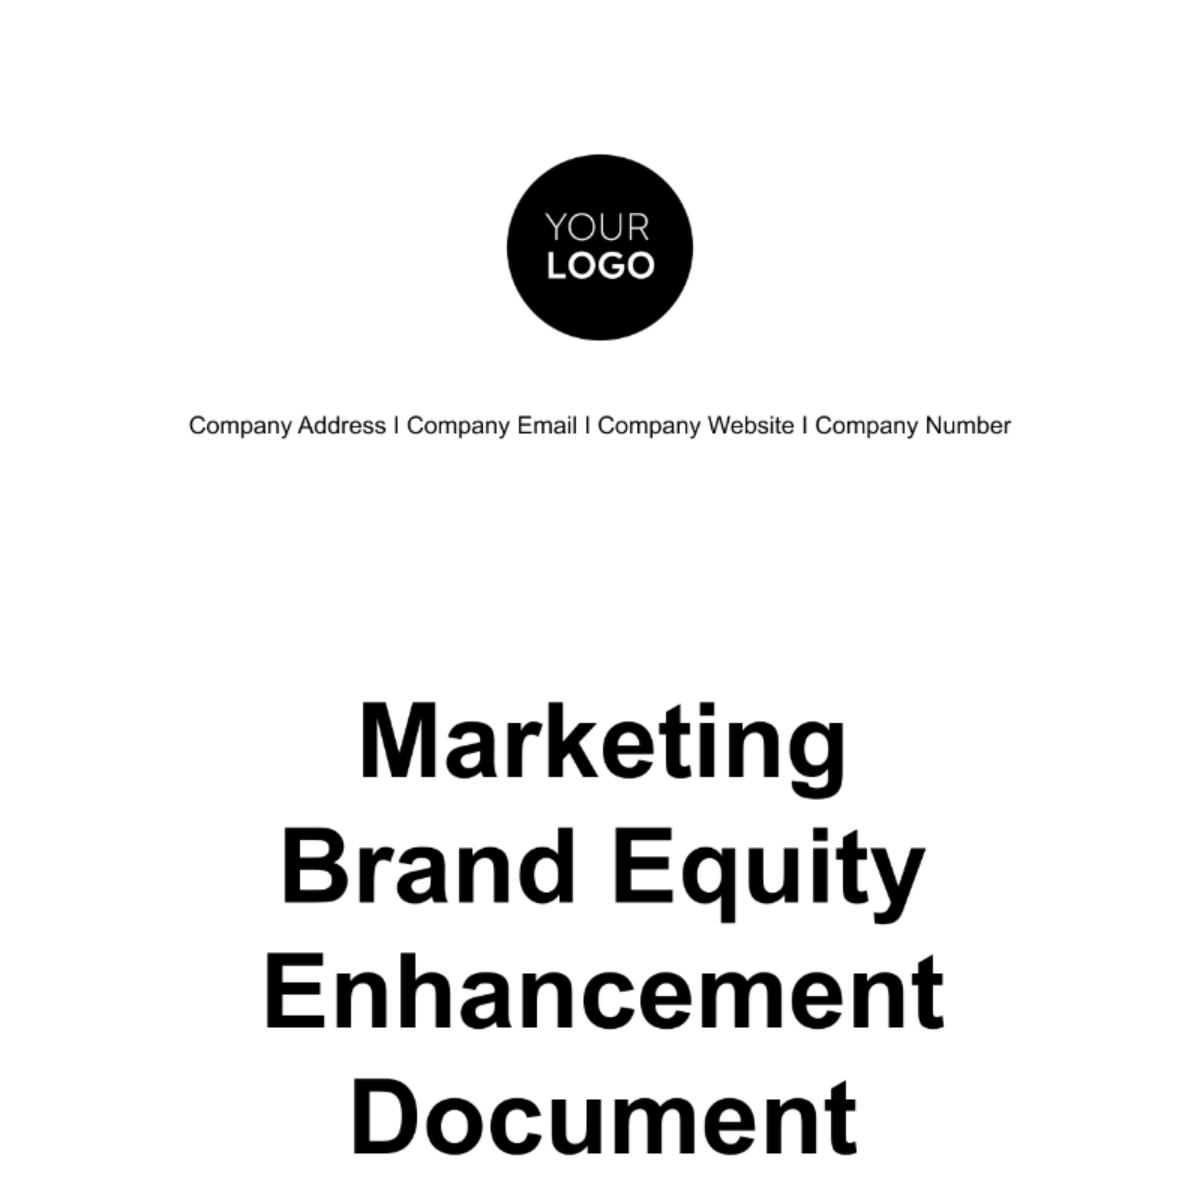 Marketing Brand Equity Enhancement Document Template